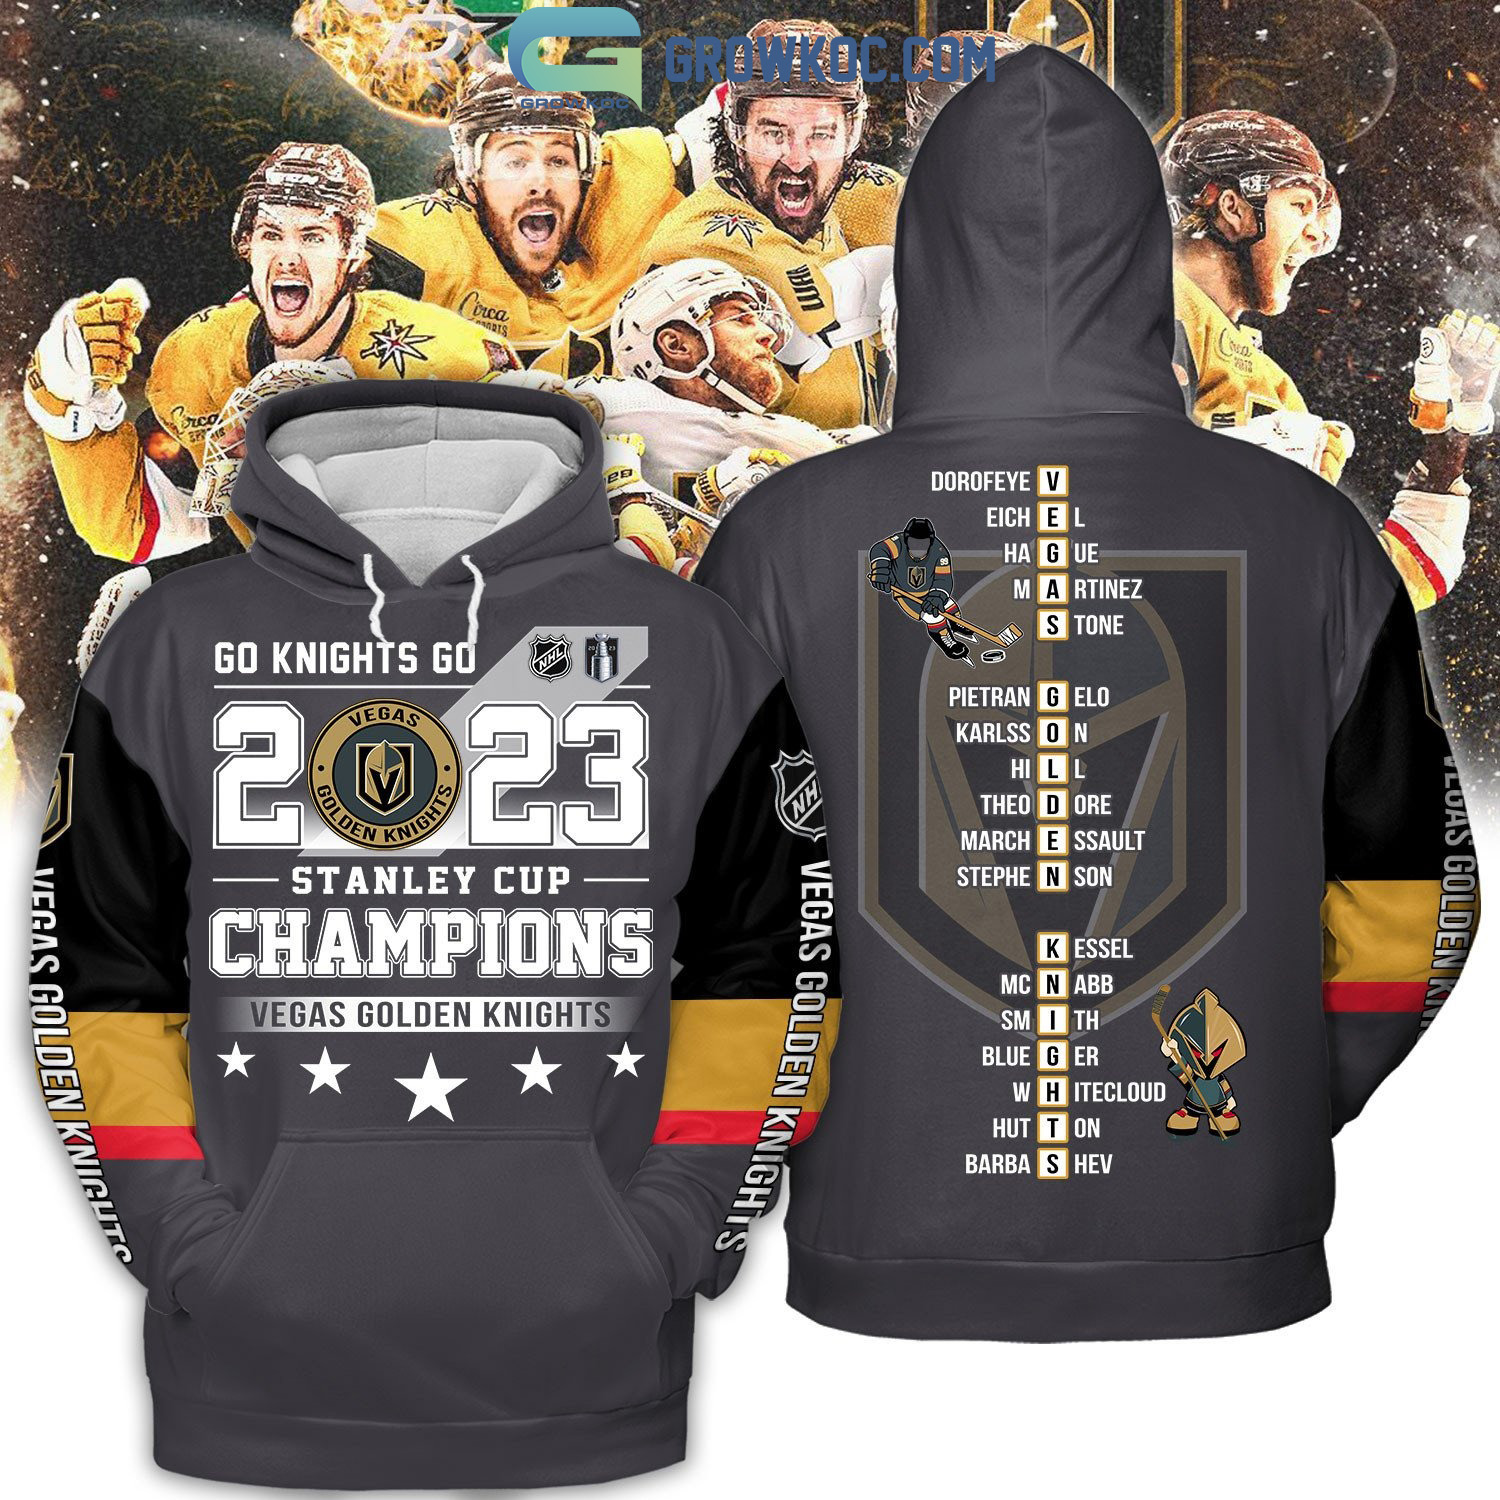 https://growkoc.com/wp-content/uploads/2023/06/2023-Go-Kinghts-Go-Stanley-Cup-Champions-Vegas-Golden-Knight-Best-Team-Grey-Design-Hoodie-T-Shirt2B1-nlMER.jpg